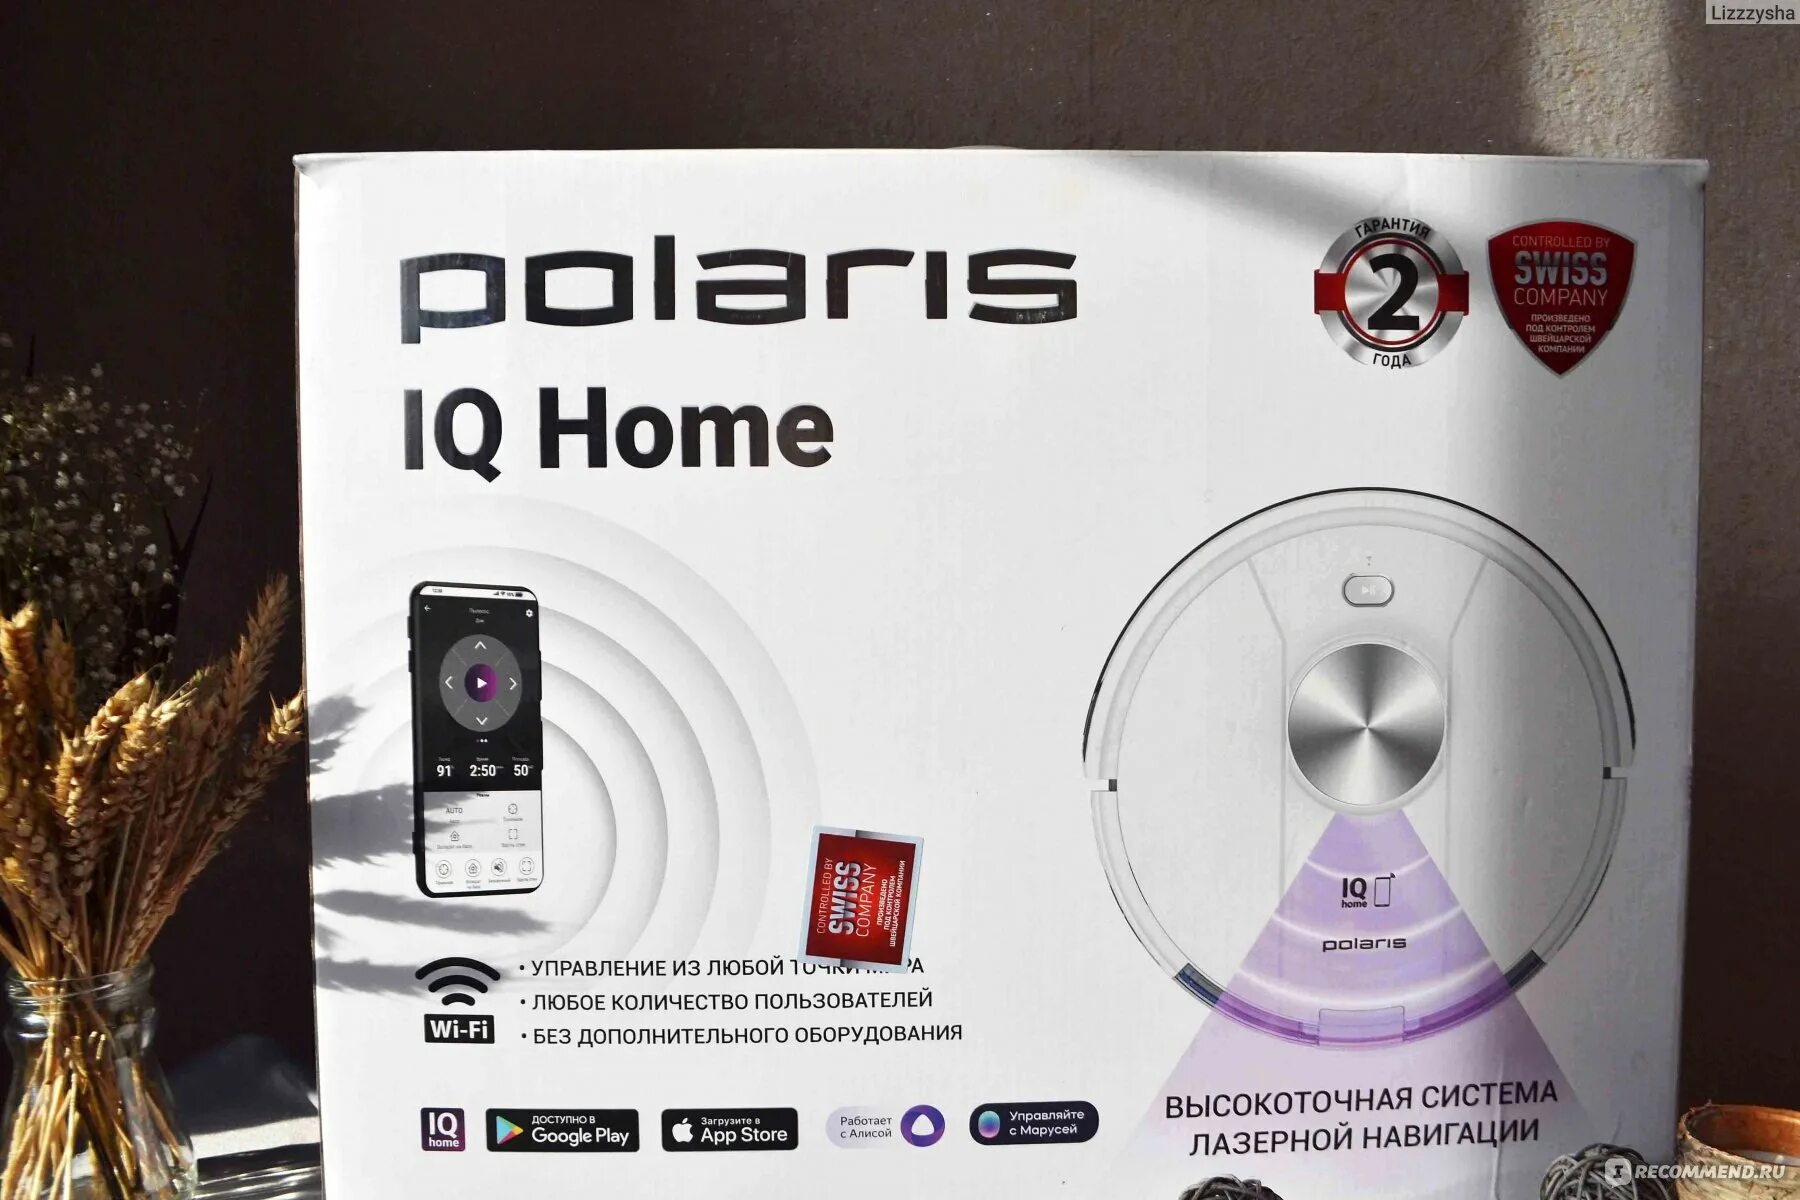 Polaris 3900 IQ Home. Polaris PVCR 3900 IQ Home Panorama. Polaris 3900 IQ Home Panorama Aqua. Polaris 3900 IQ Home пульт.